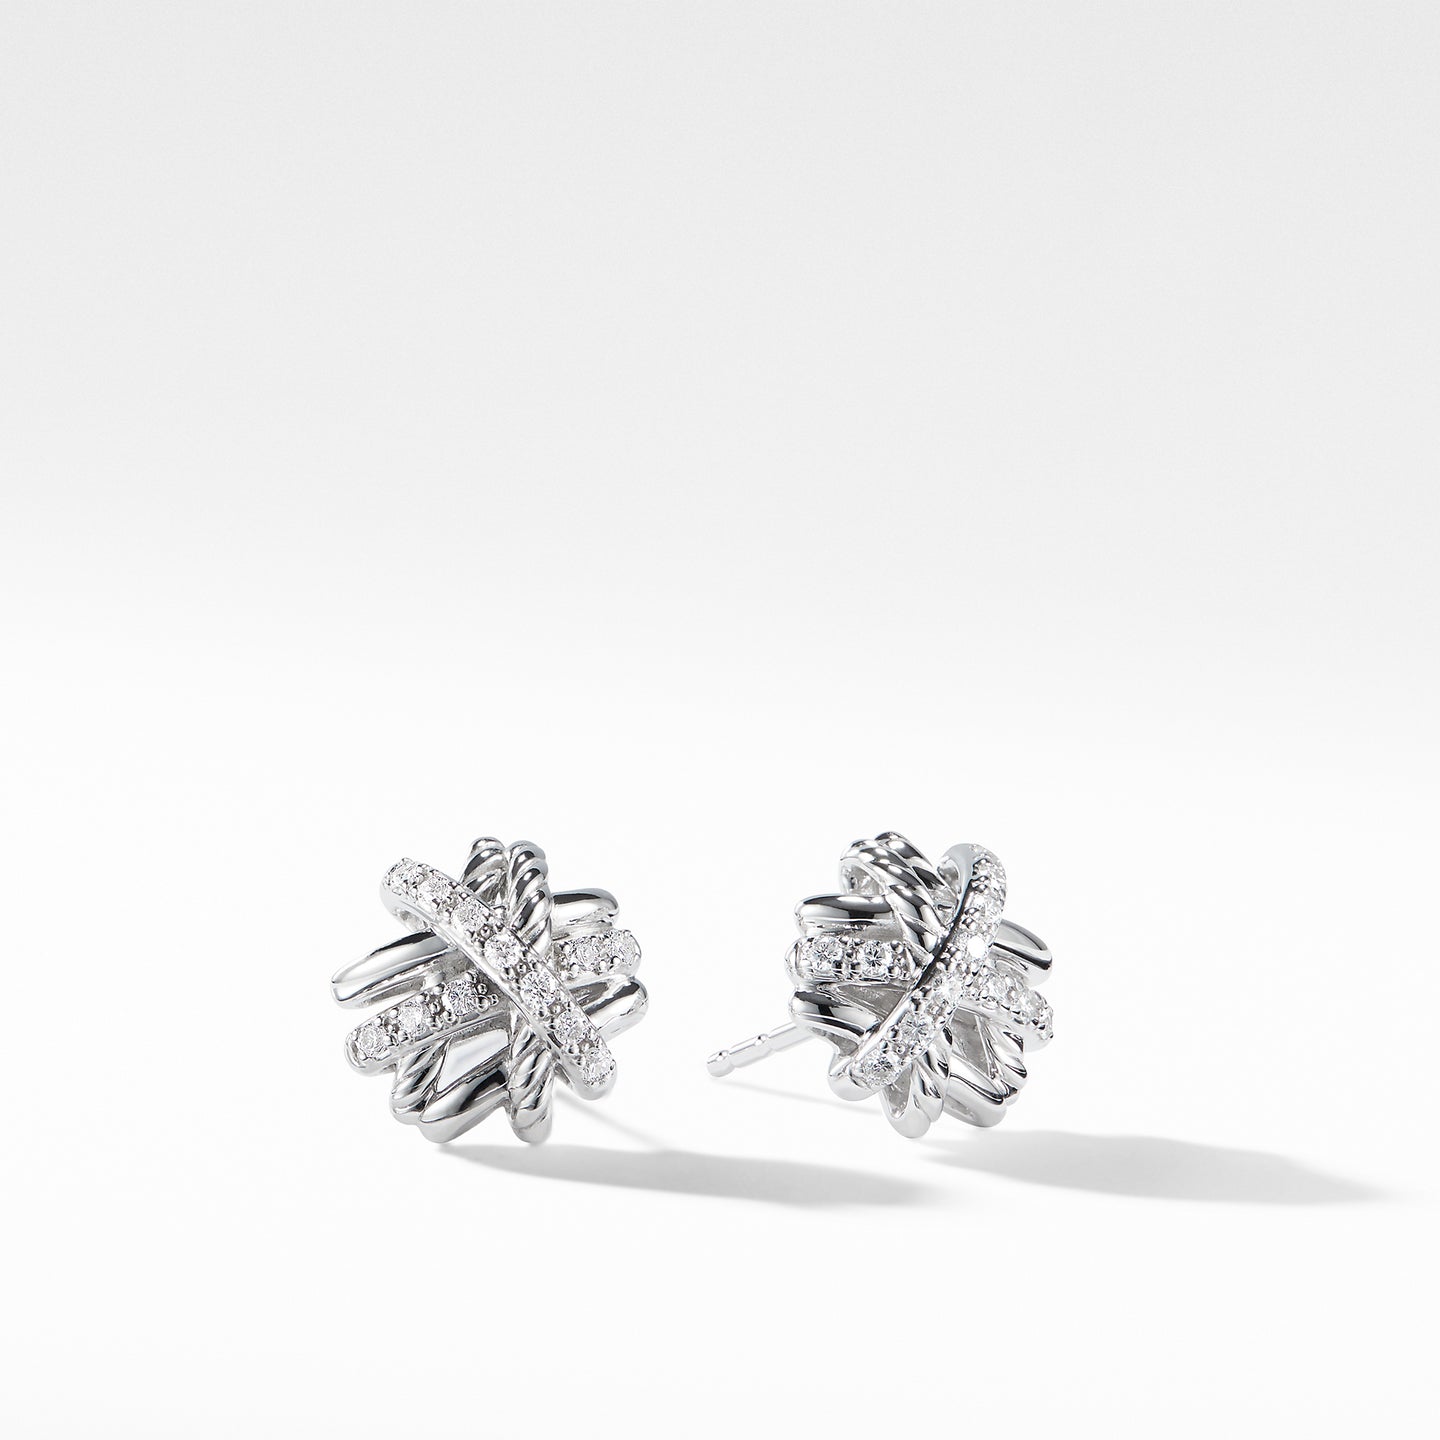 David Yurman 11mm Crossover Earrings with Diamonds